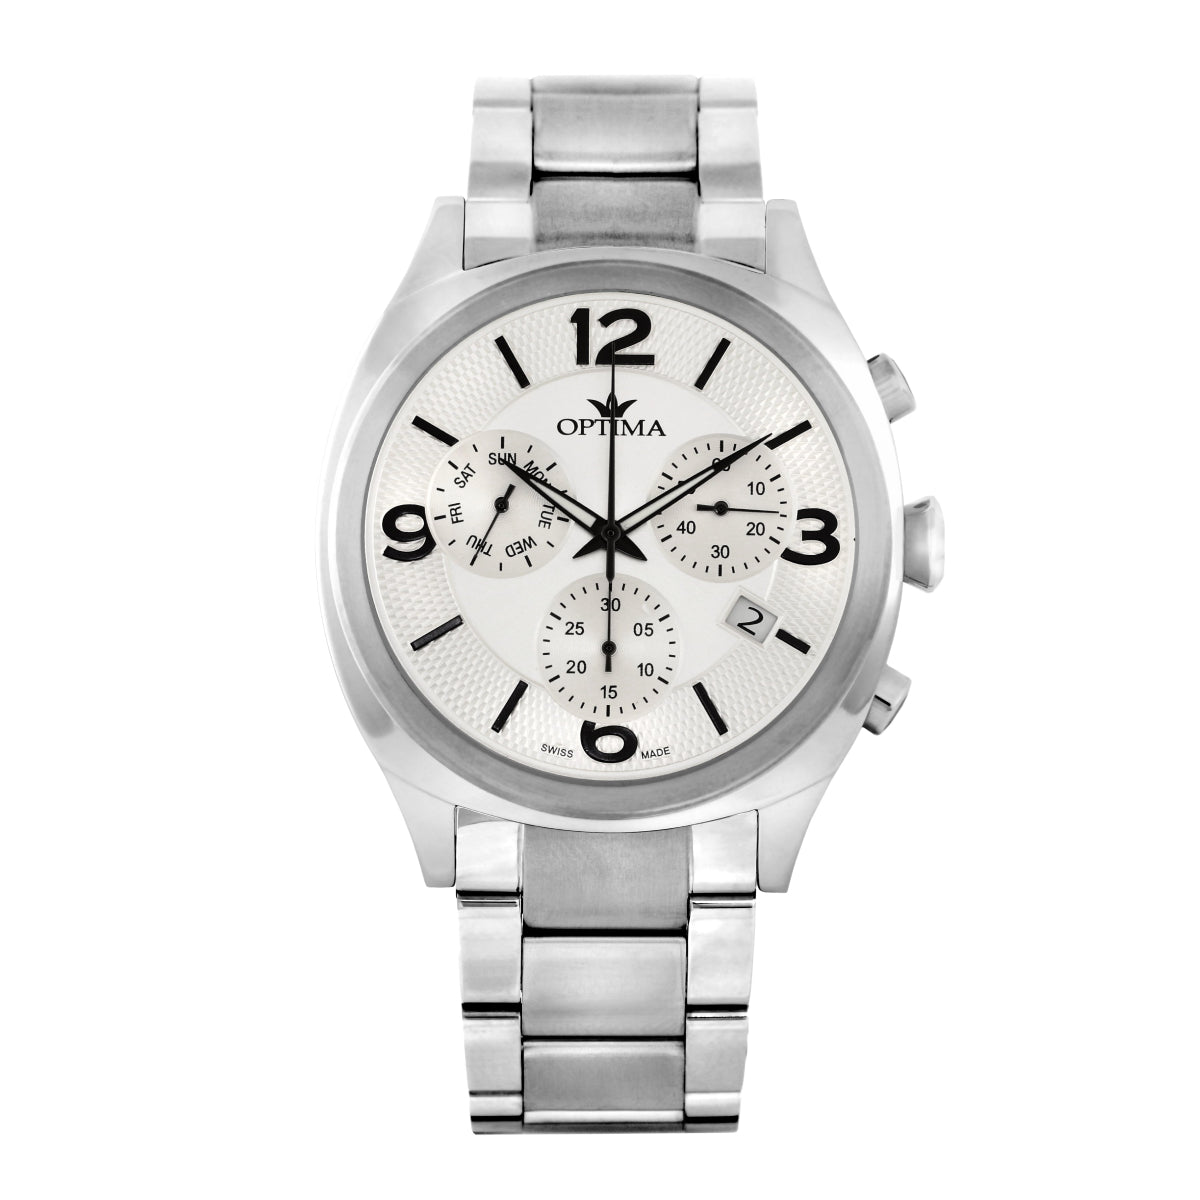 Optima Men's Swiss Quartz Watch with White Dial - OPT-0001